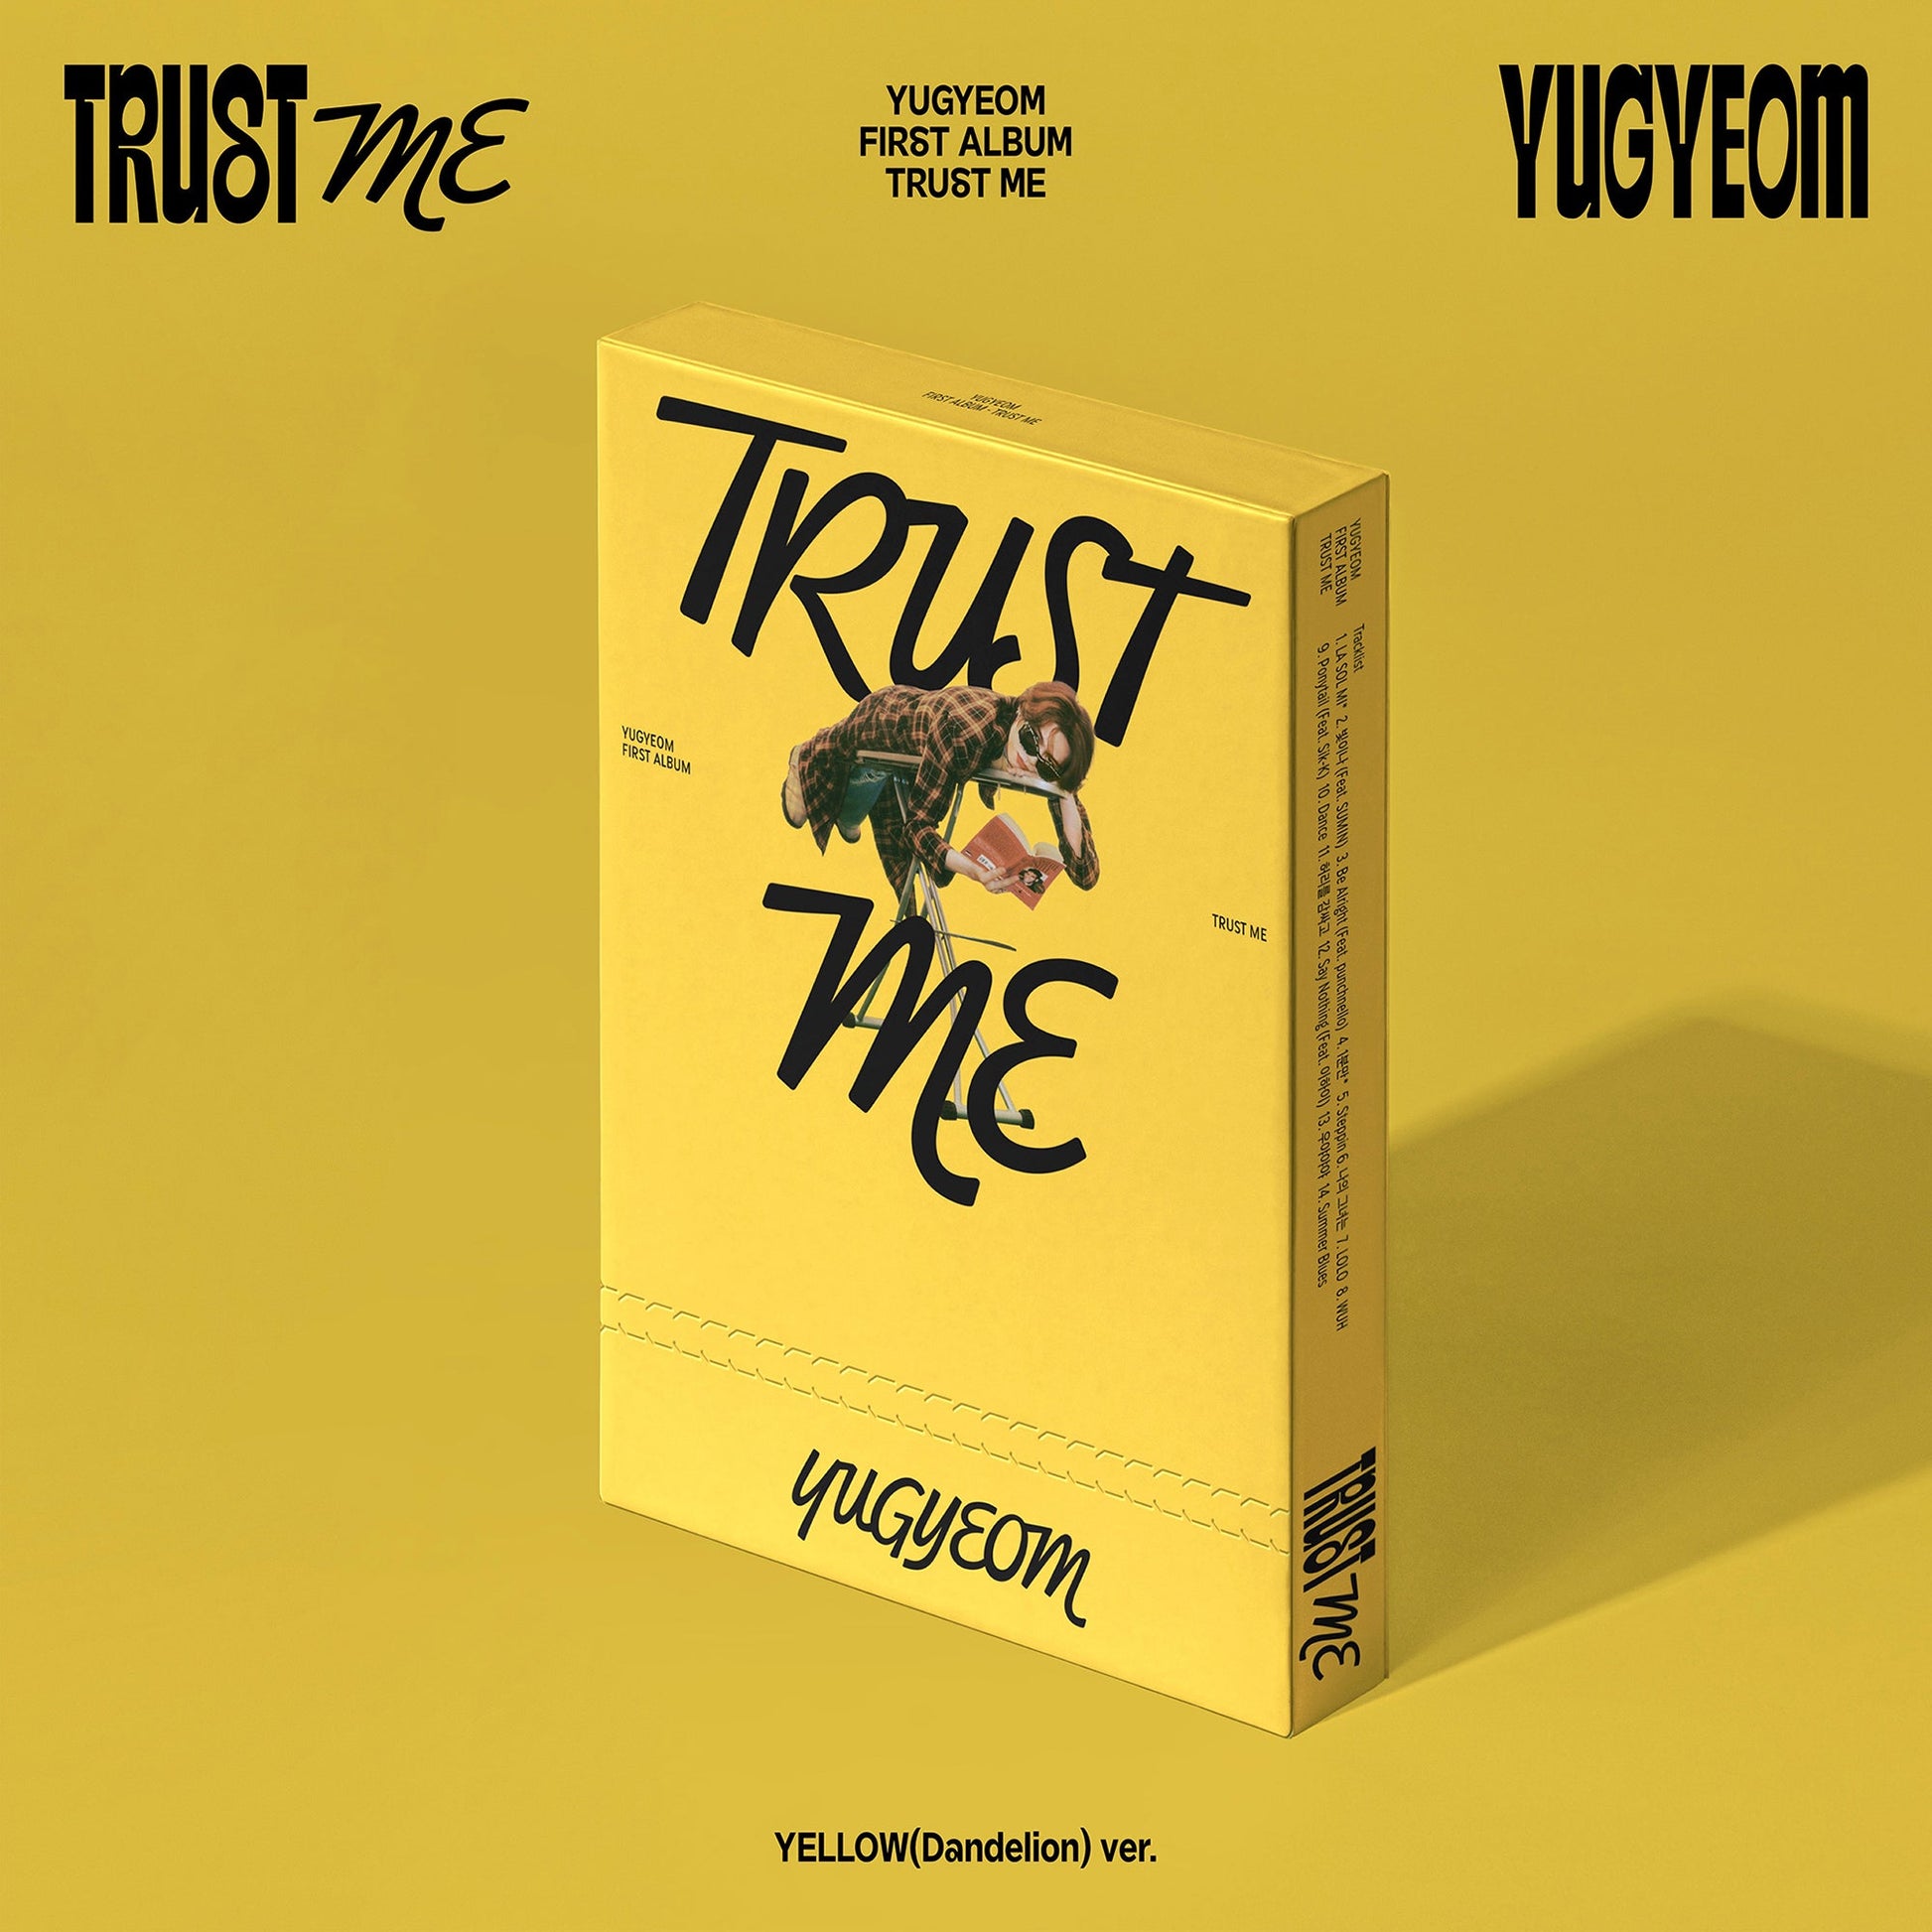 YUGYEOM 1ST ALBUM 'TRUST ME' YELLOW(DANDELION) VERSION COVER